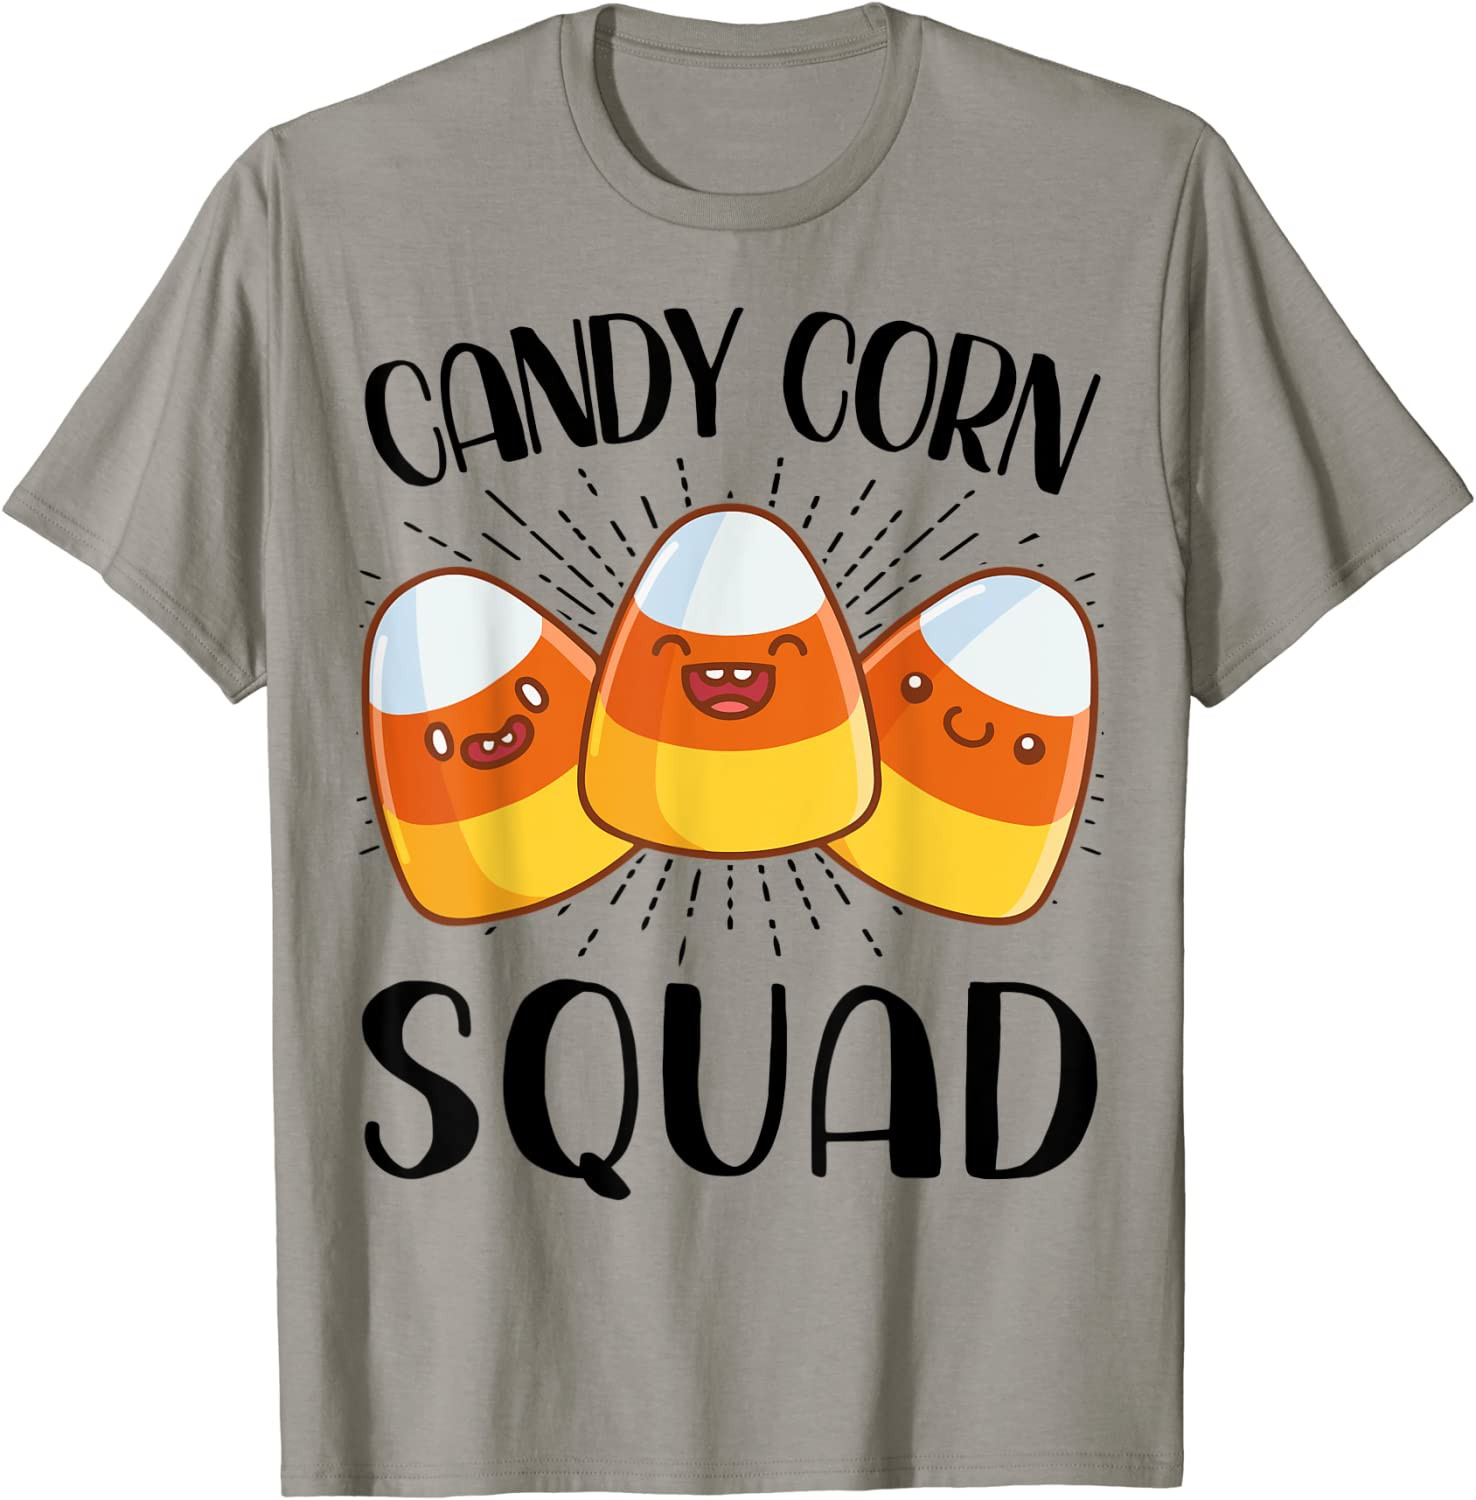 Candy Corn Squad Halloween Costume T-Shirt